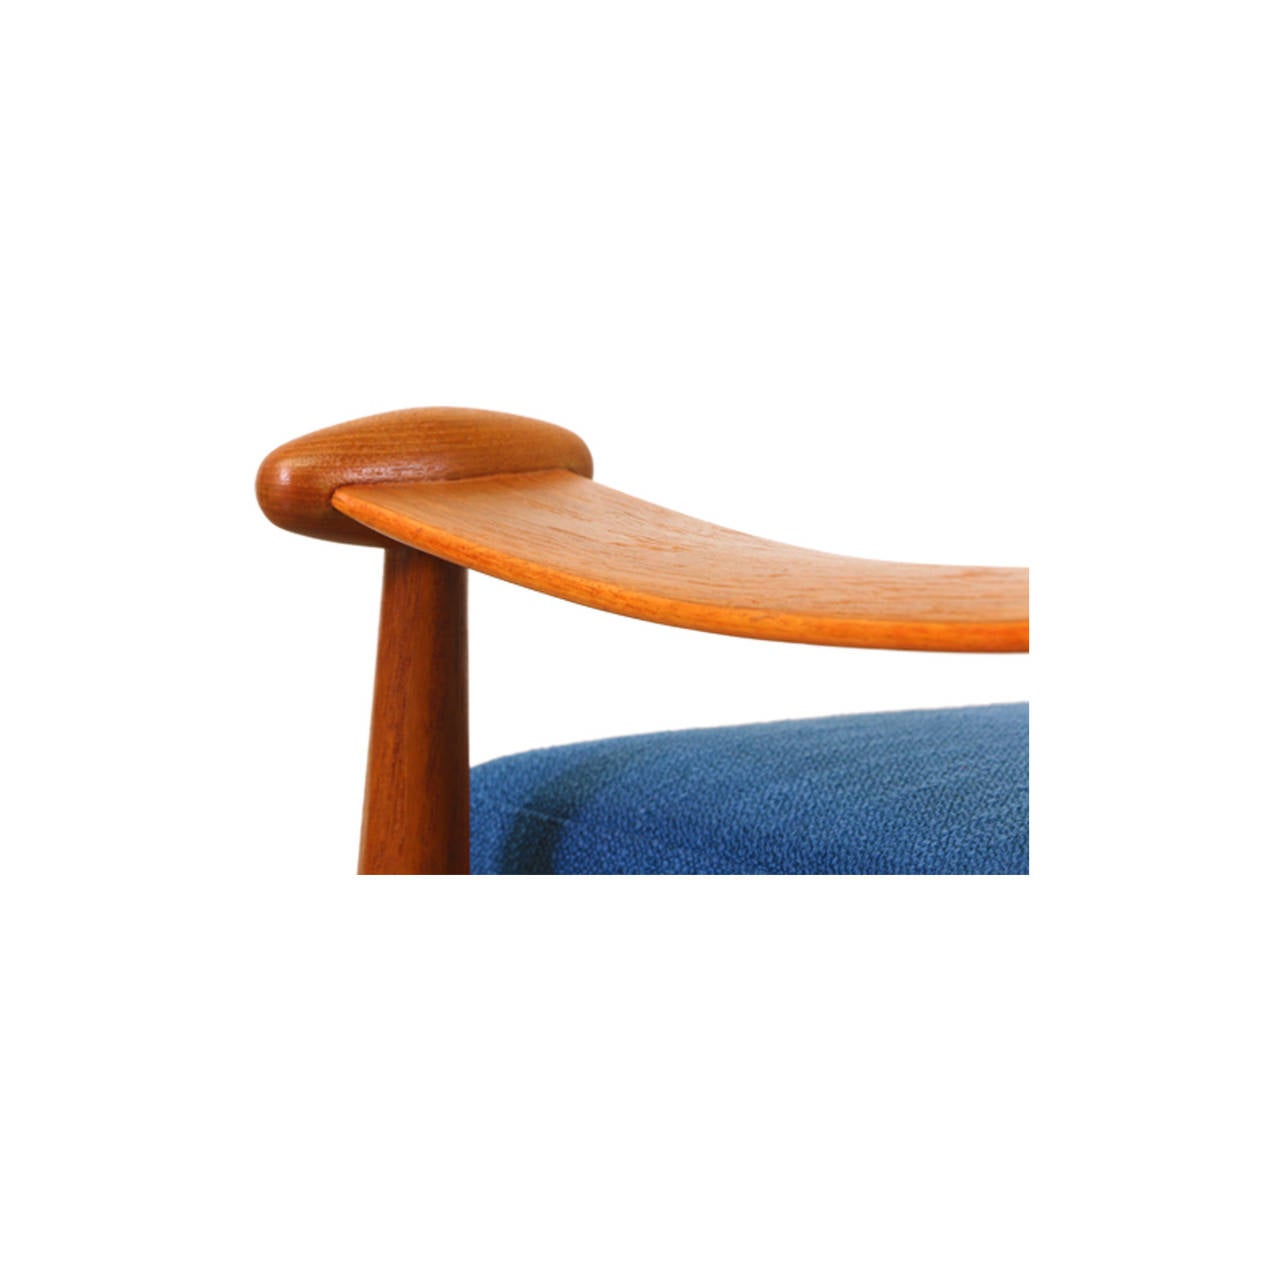 Mid-20th Century Finn Juhl Model #133 “Spade” Teak Lounge Chairs for France & Son